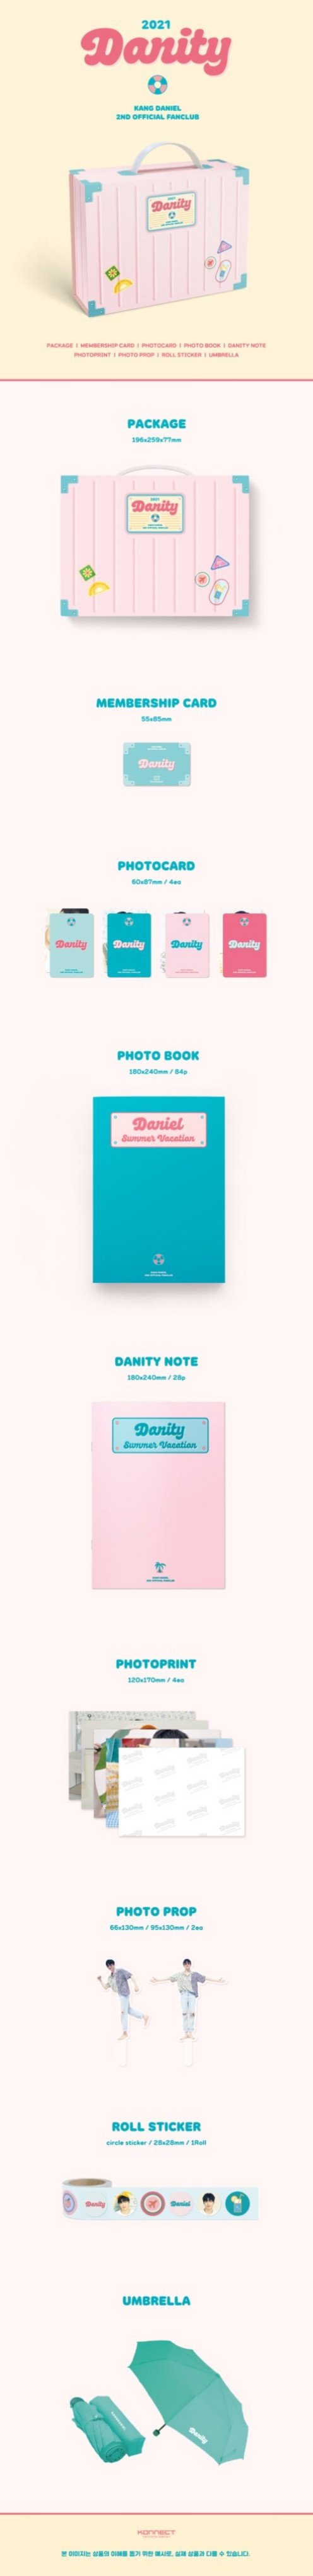 Kang Daniel Rilis Merchandise Spesial Anggota Fanclub, Isi \'Danity 2nd Kit\' Bikin Netter Kagum